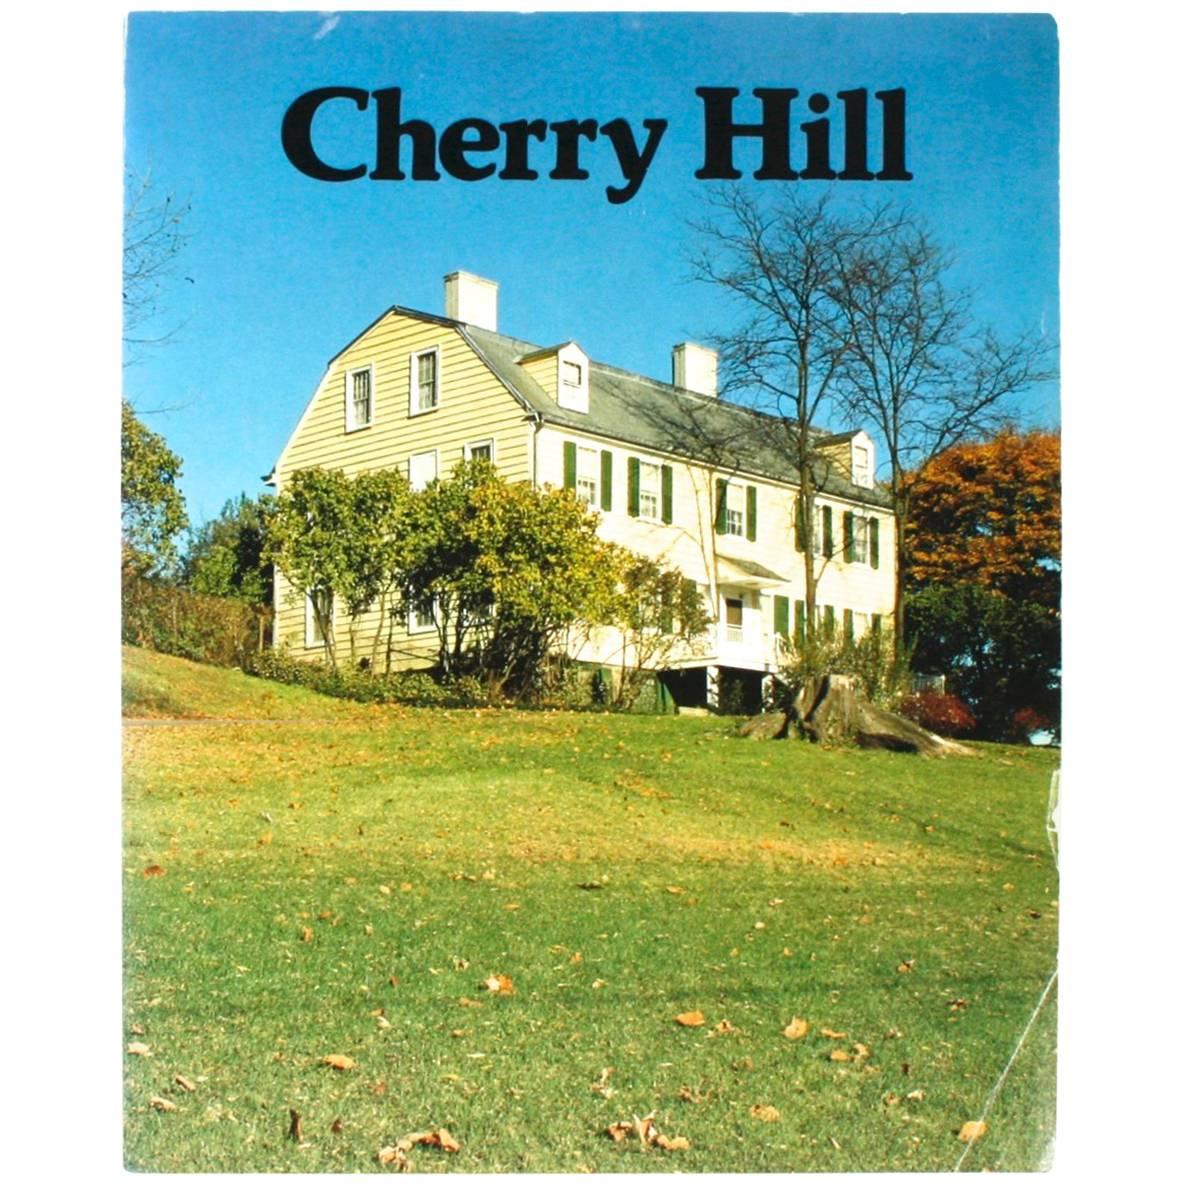 "Cherry Hill" by Roderic H. Blackburn